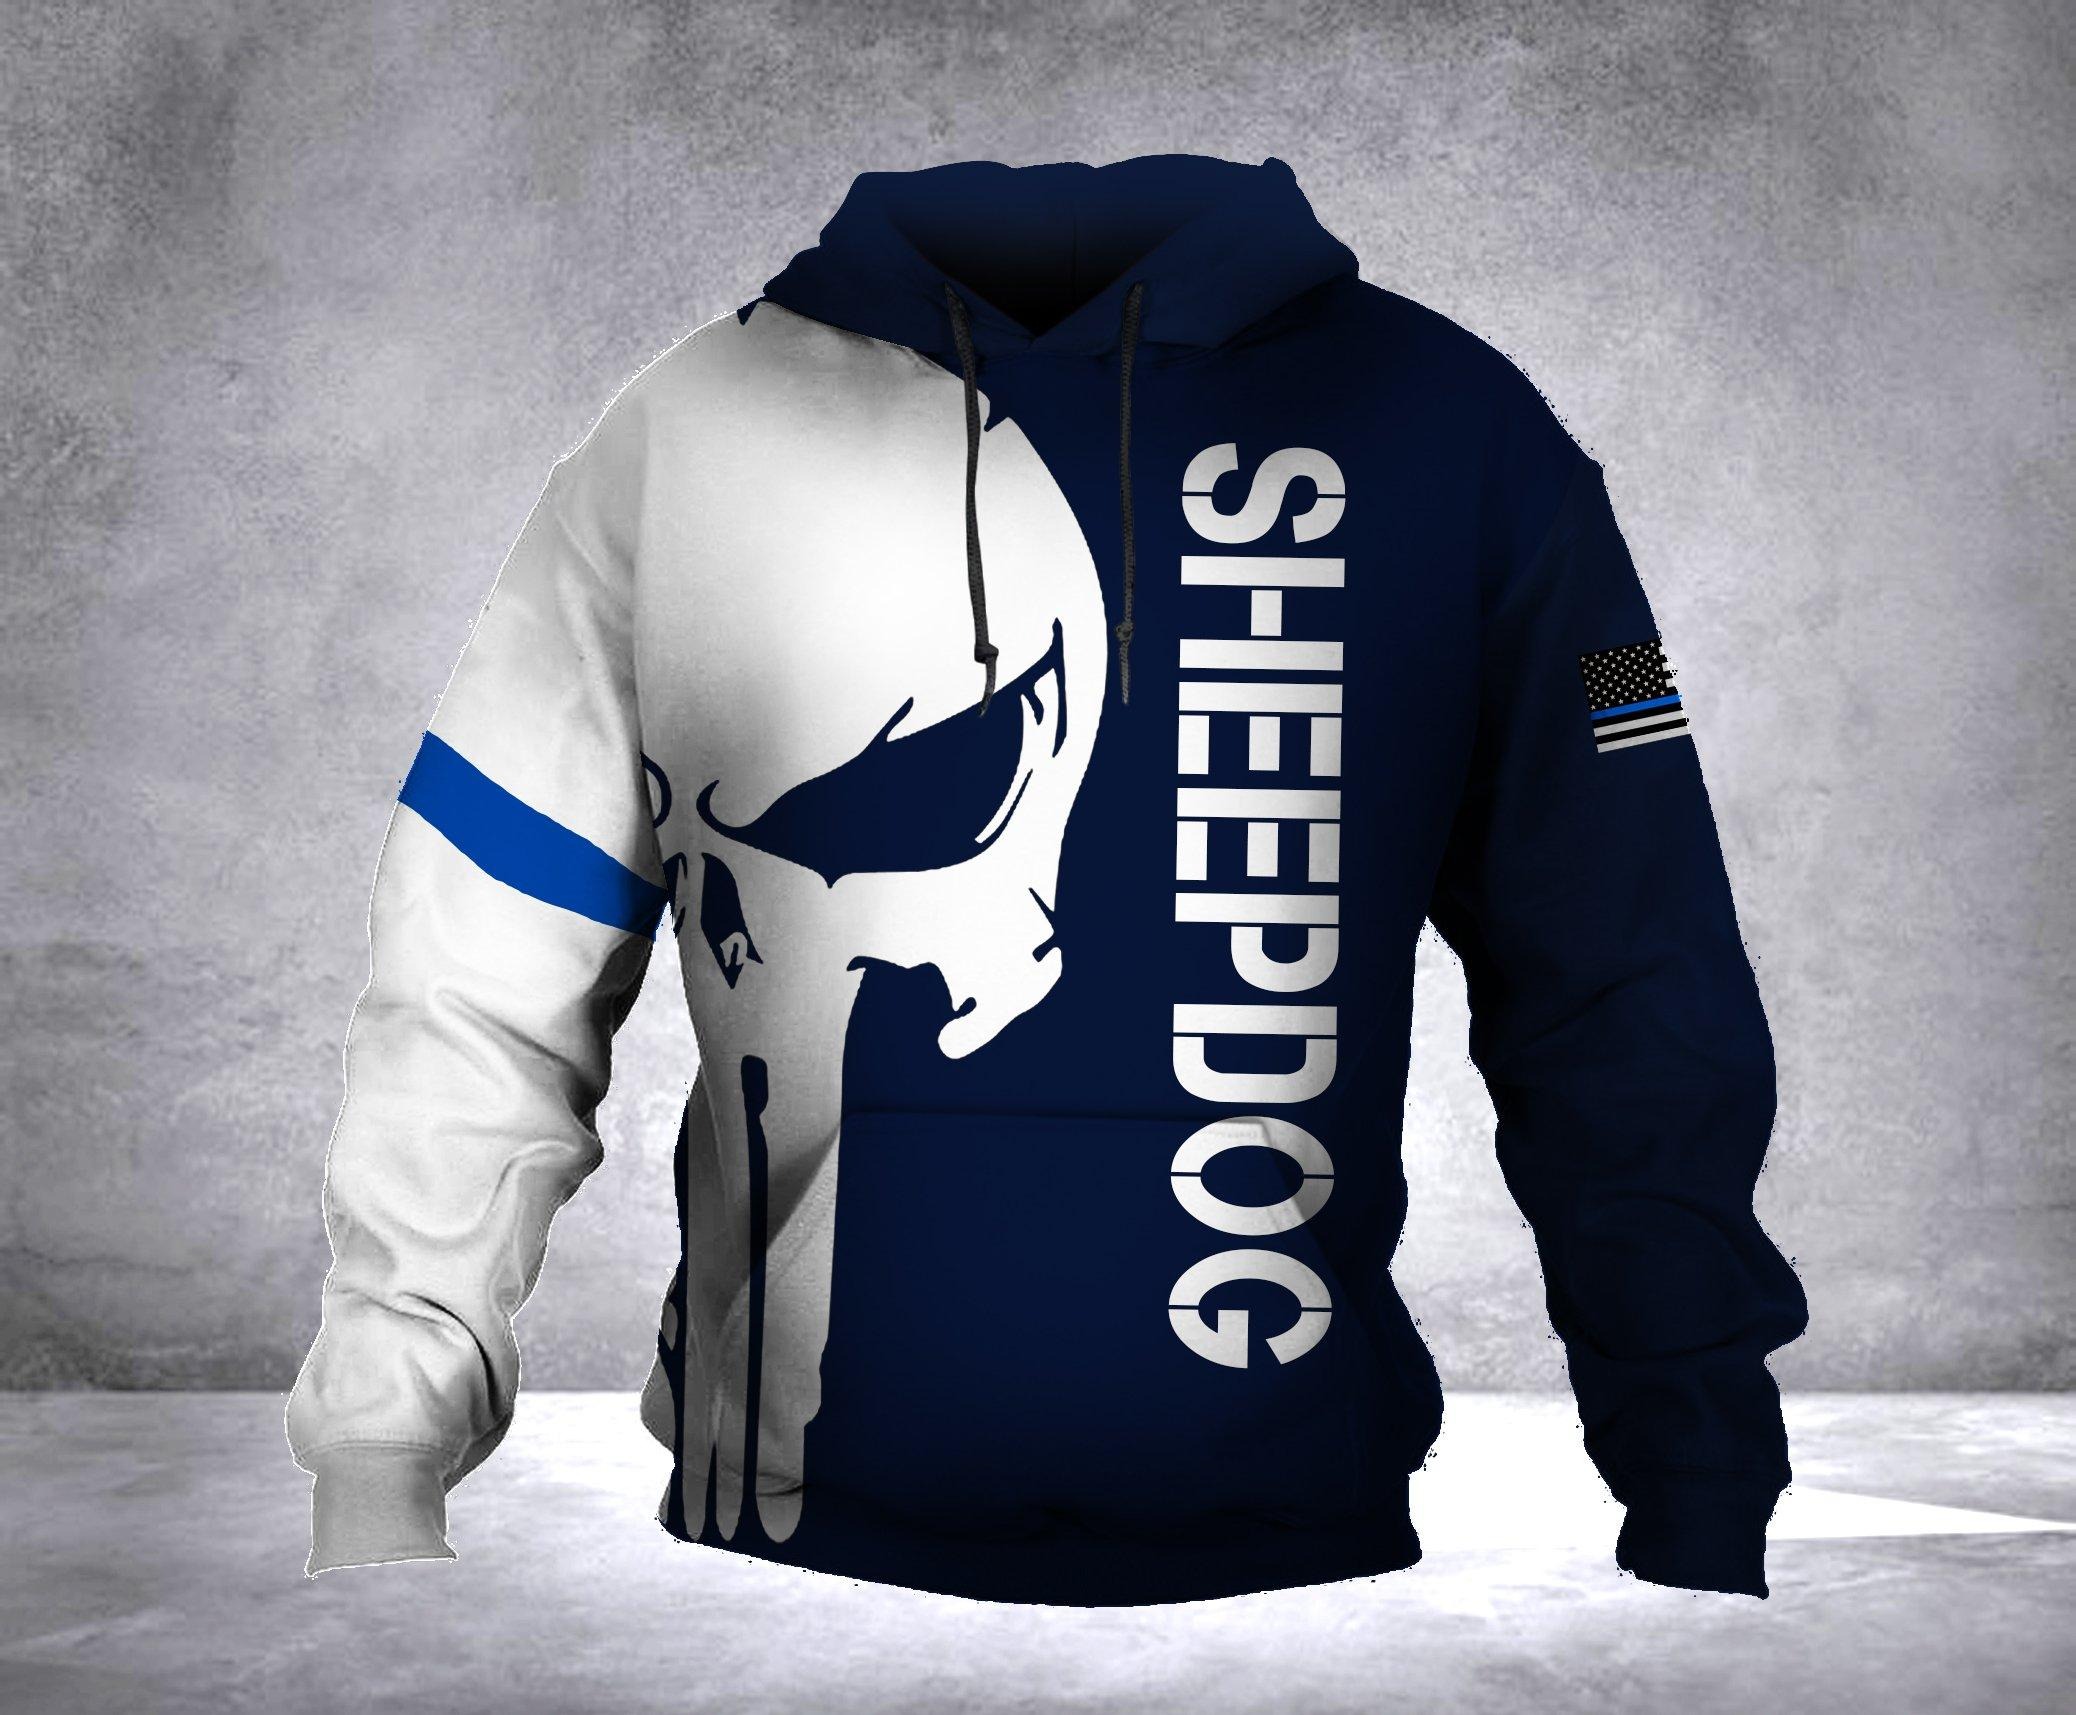 Sheepdog skull 3d shirt and hoodies